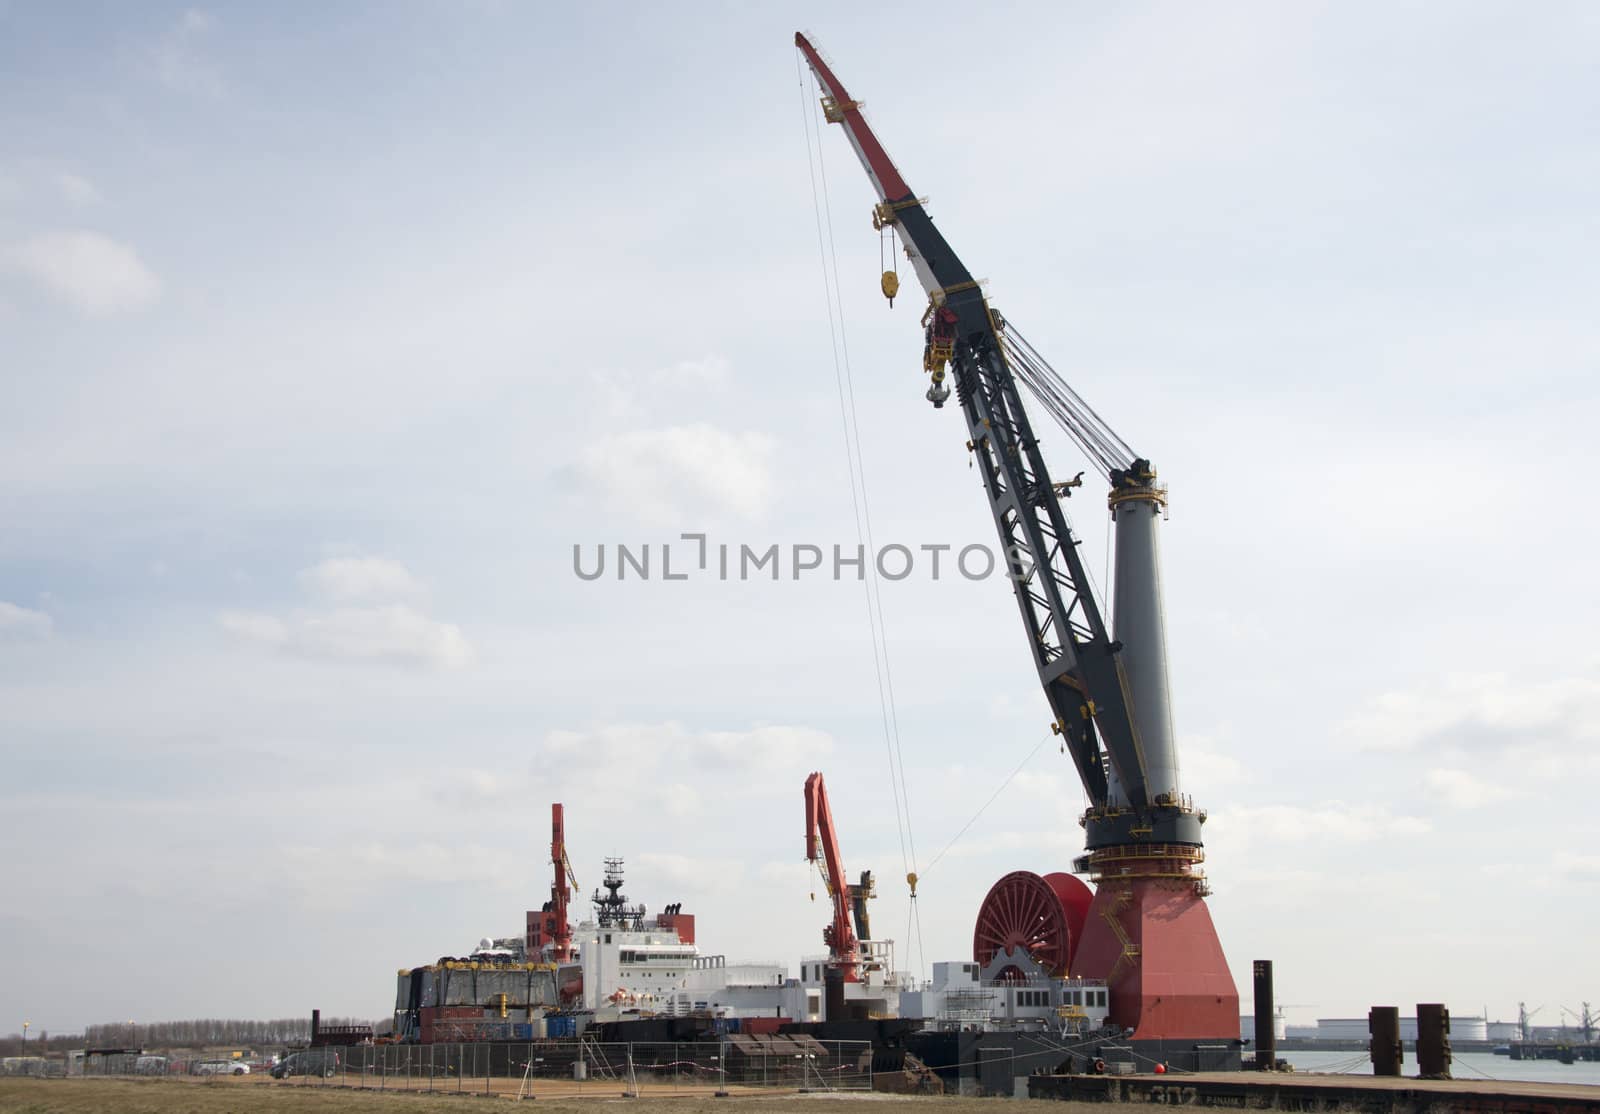 giant crane platform in holland by compuinfoto